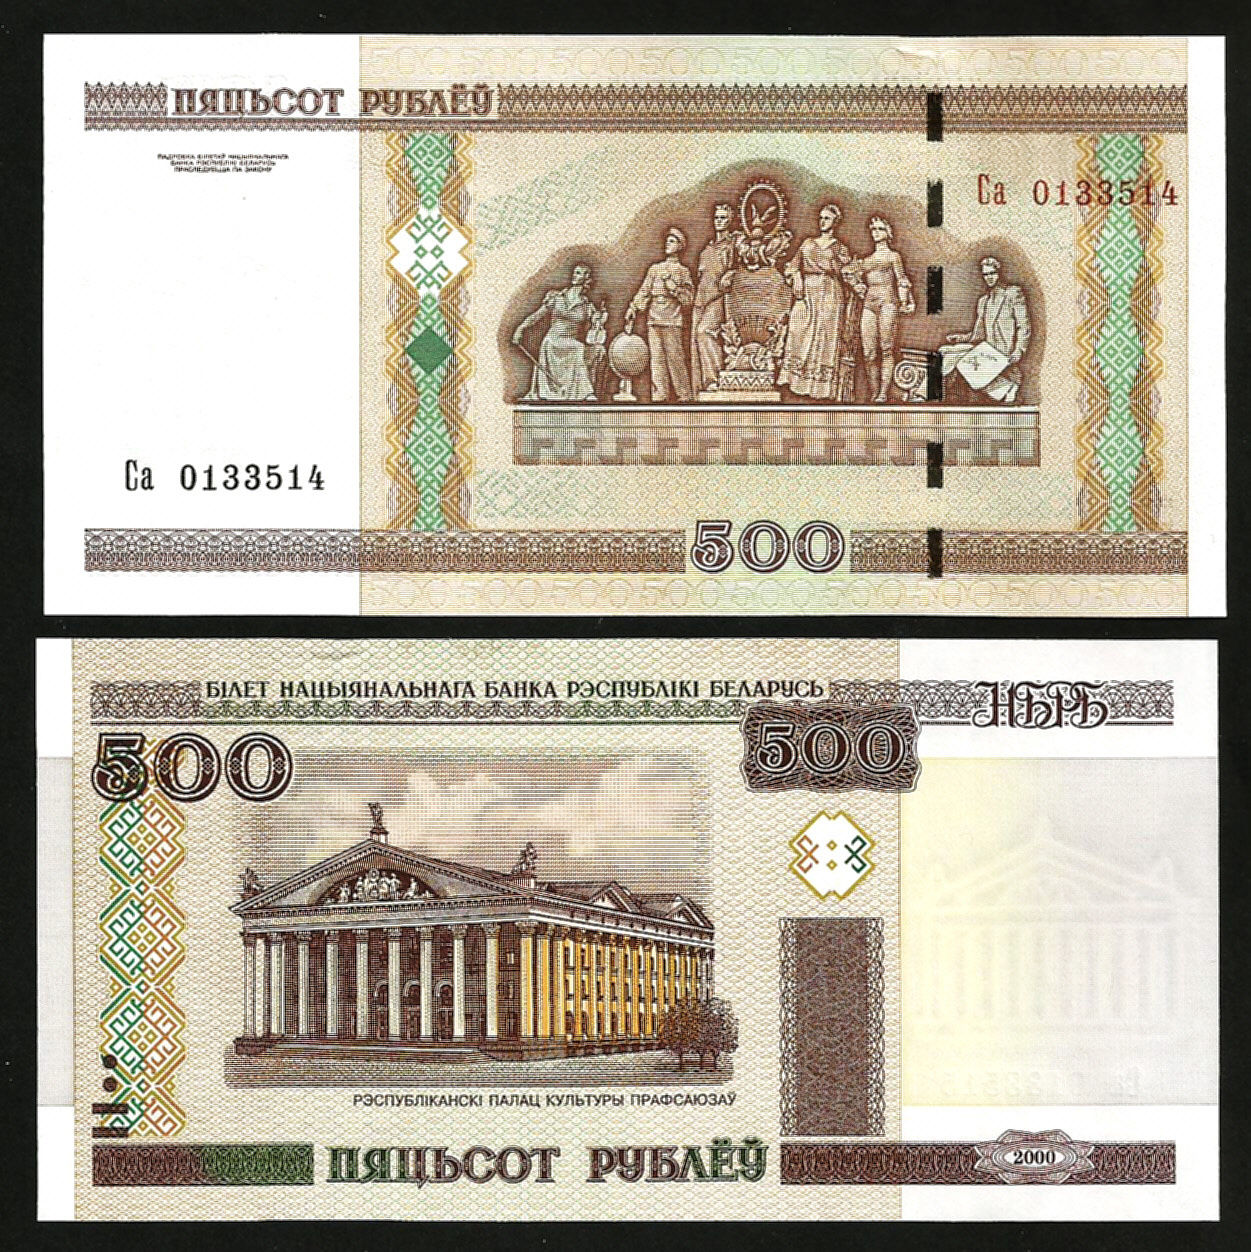 Belarus 2000(2011) - 500 ruble UNC